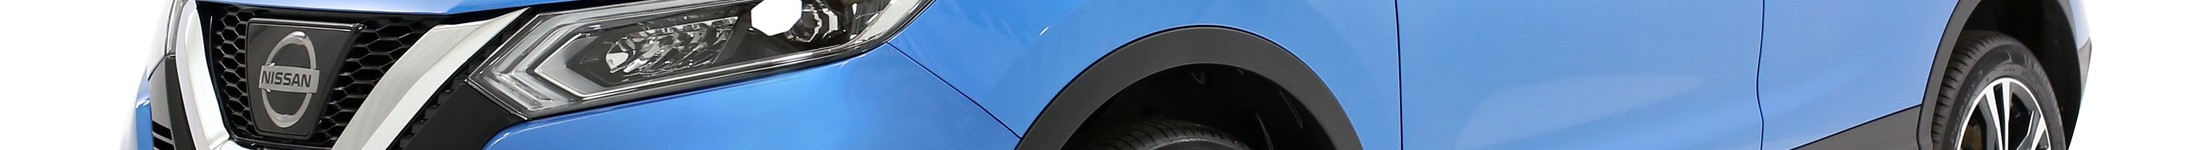 Baner modelu Nissan Qashqai w usłudze abonamentowej - detal nadkola